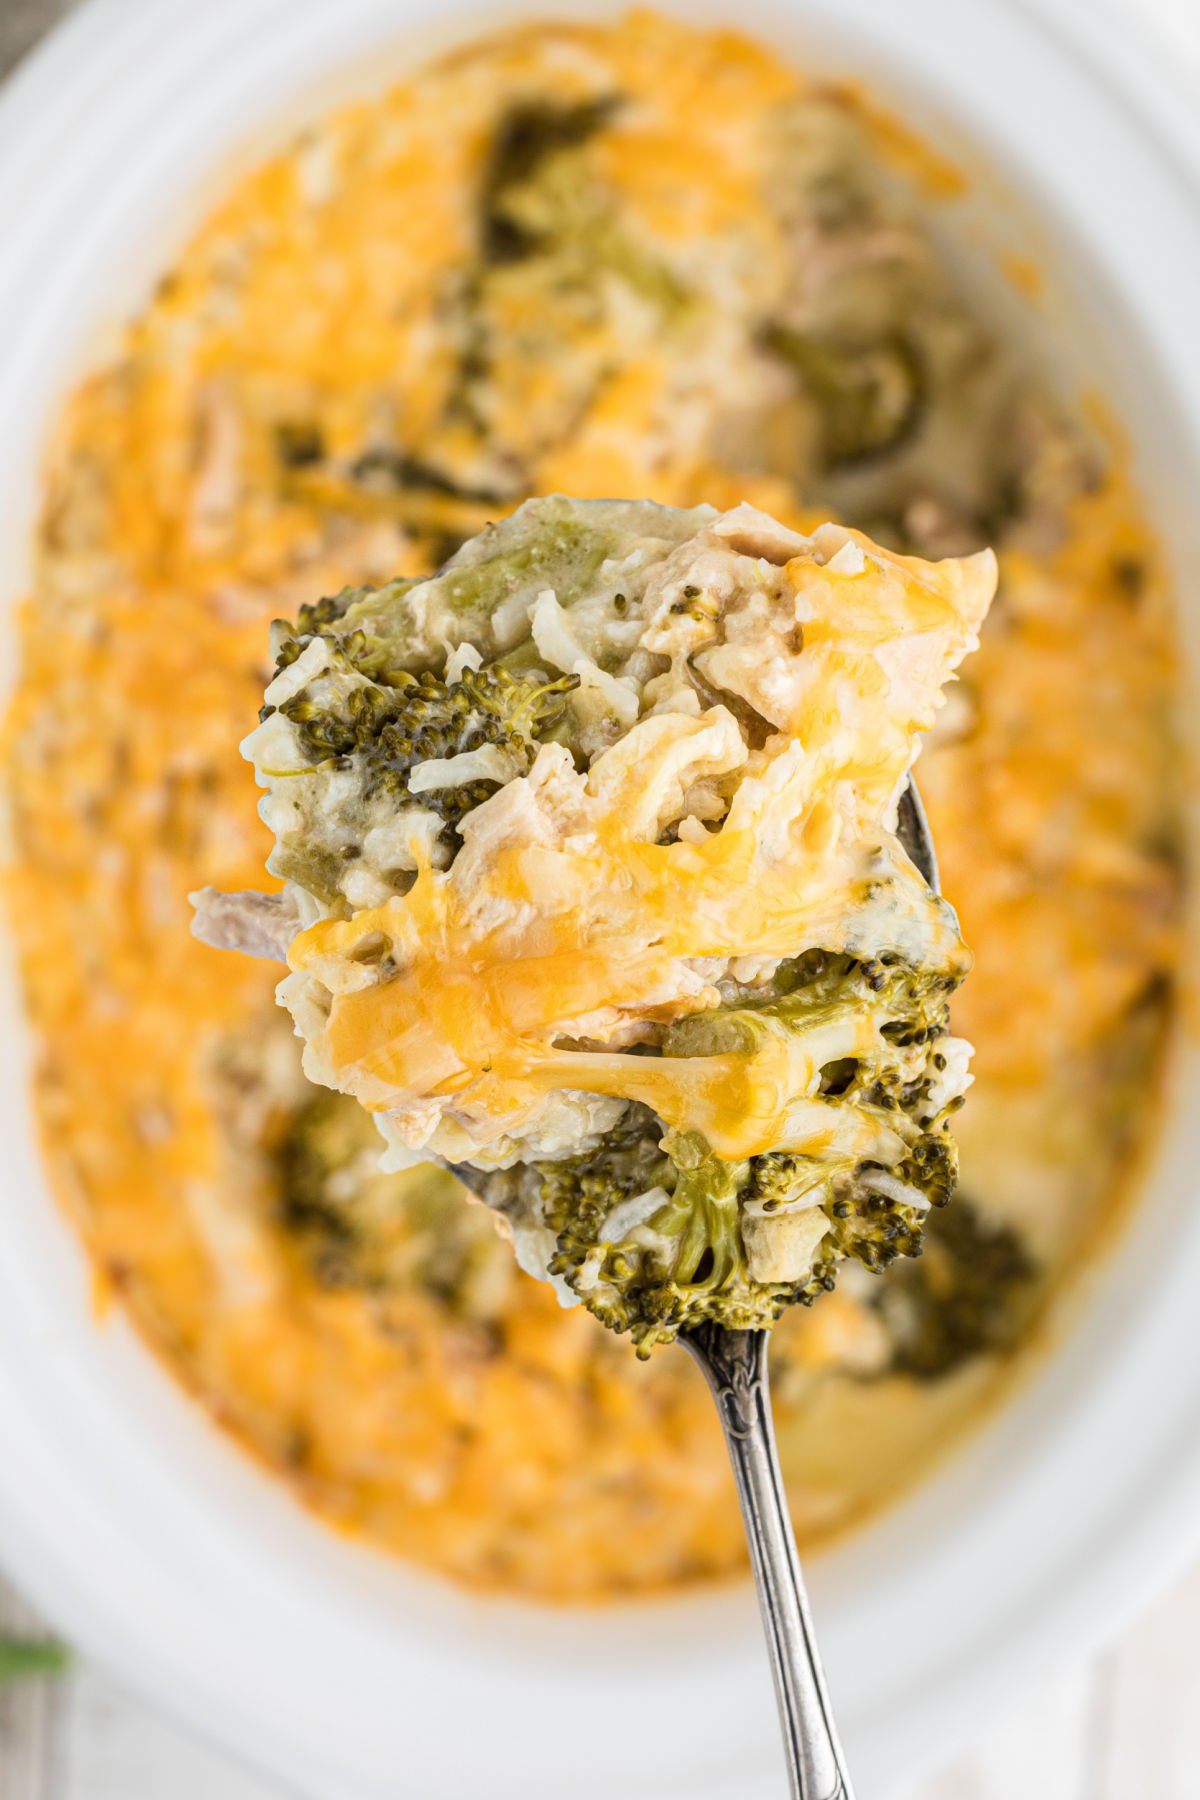 Cheesy Broccoli and Rice Casserole: A Kid-Friendly Option